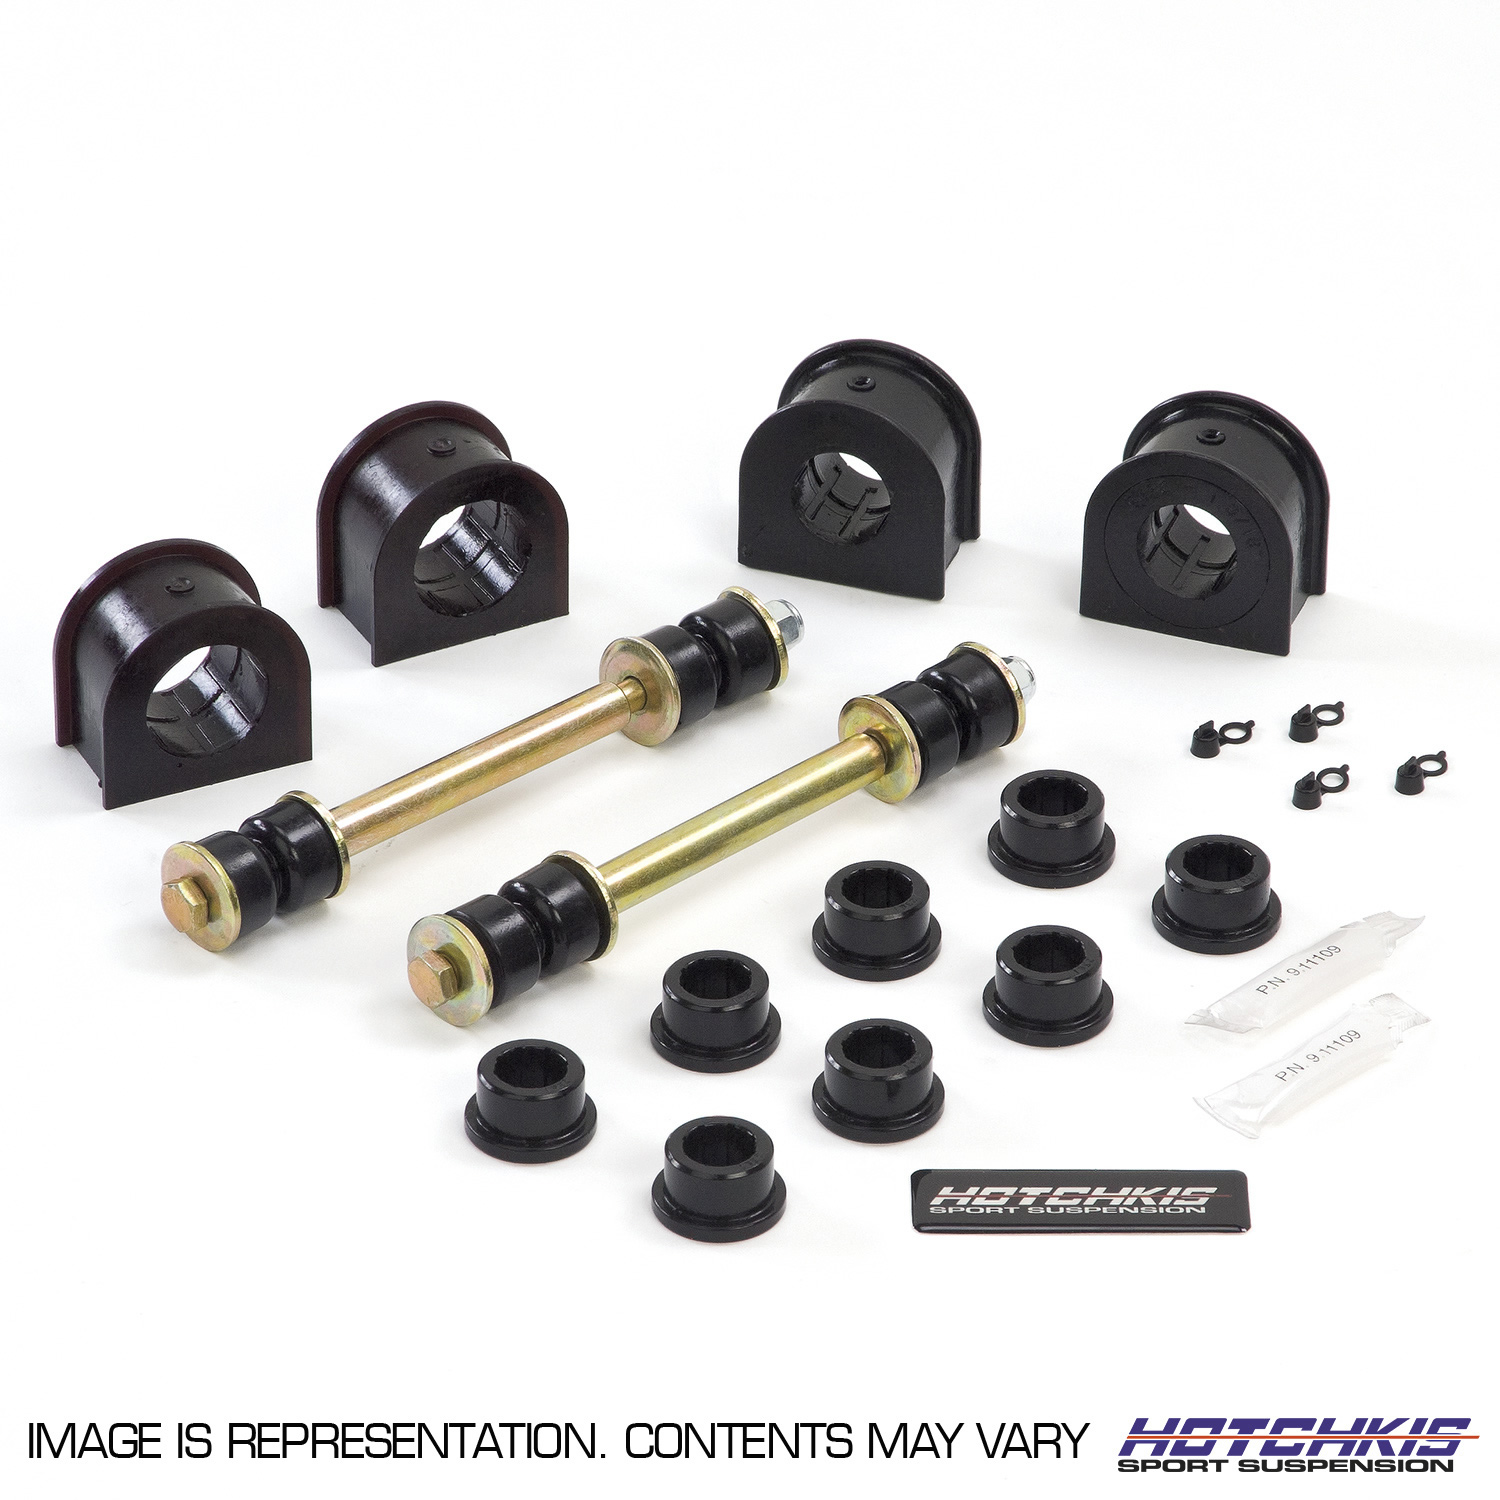 Rebuild Service Kit For Hotchkis Sport Suspension Product Kit 2202F